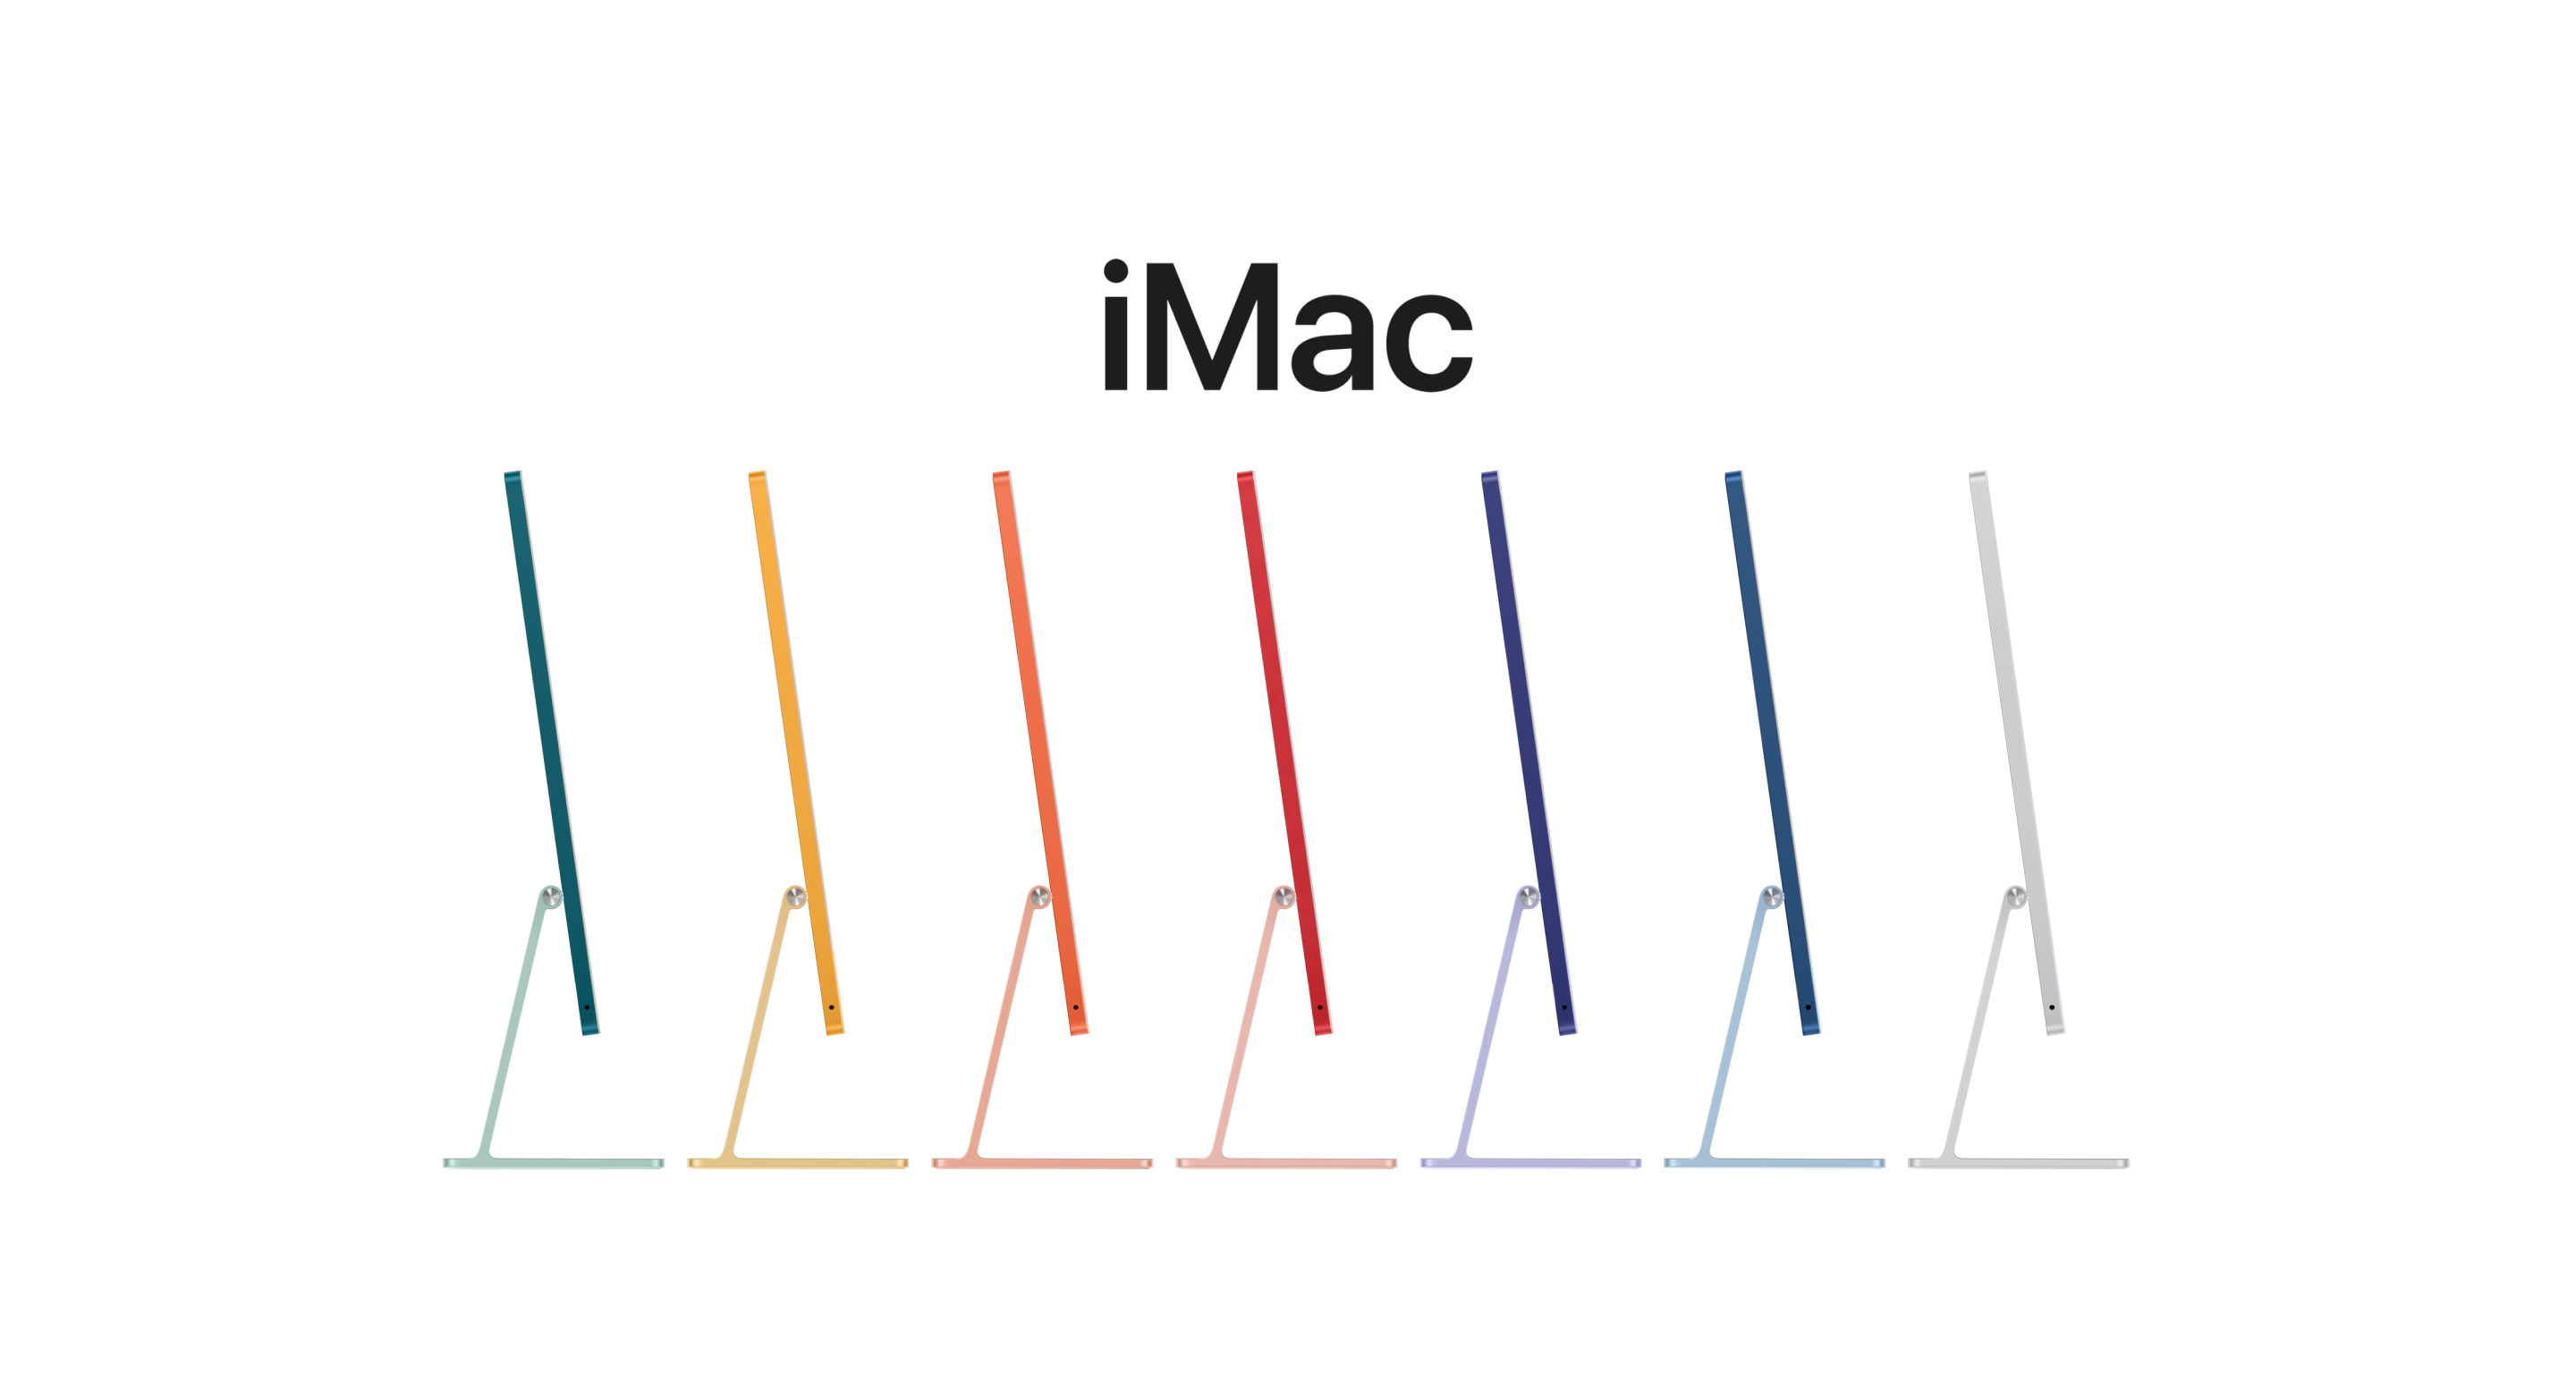 iMac 全部七款顏色的動畫